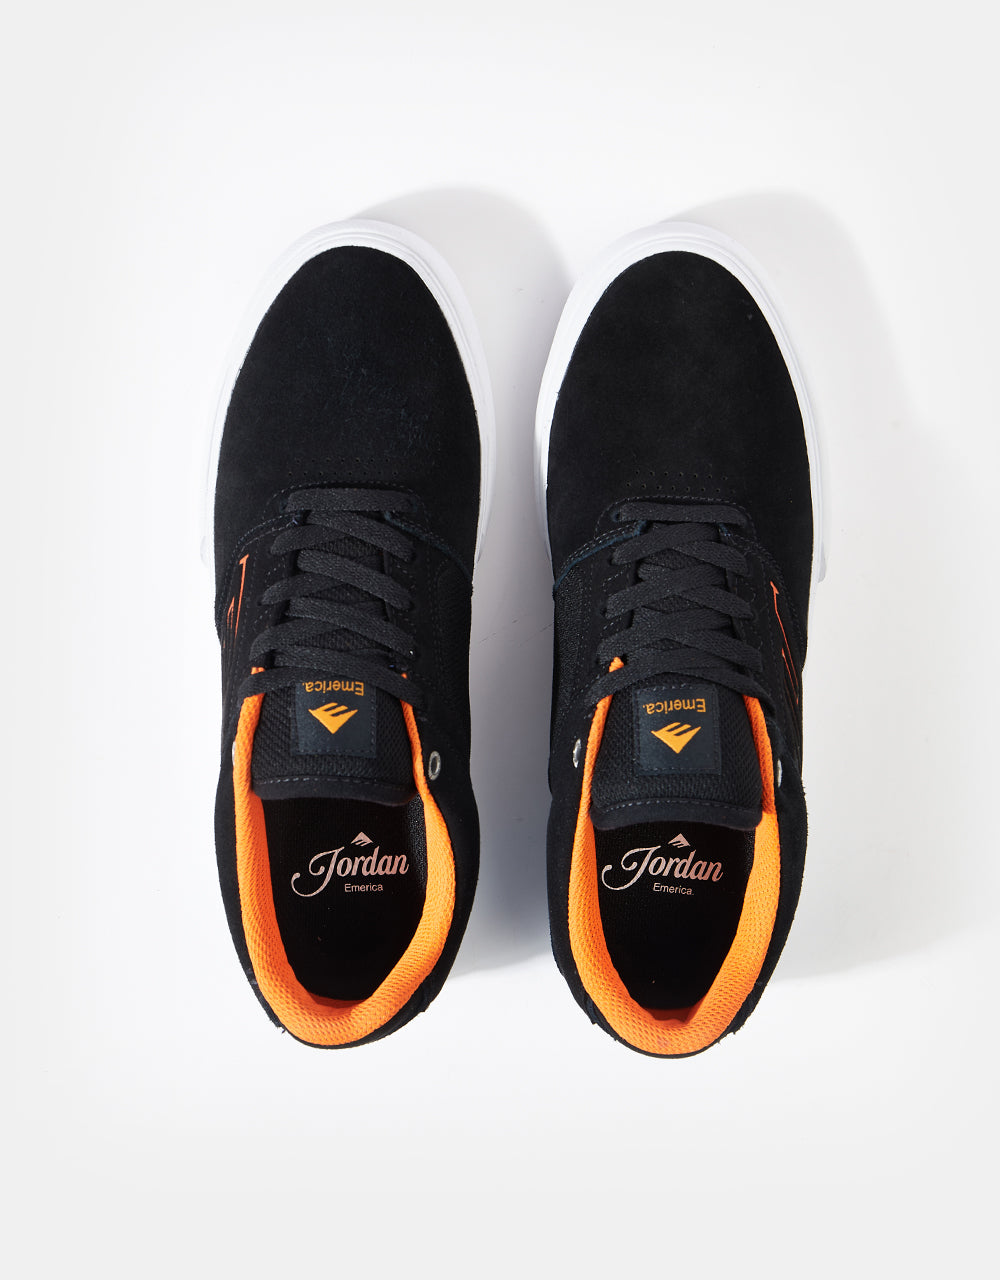 Emerica The Low Vulc Skate Shoes - Black/White/Orange